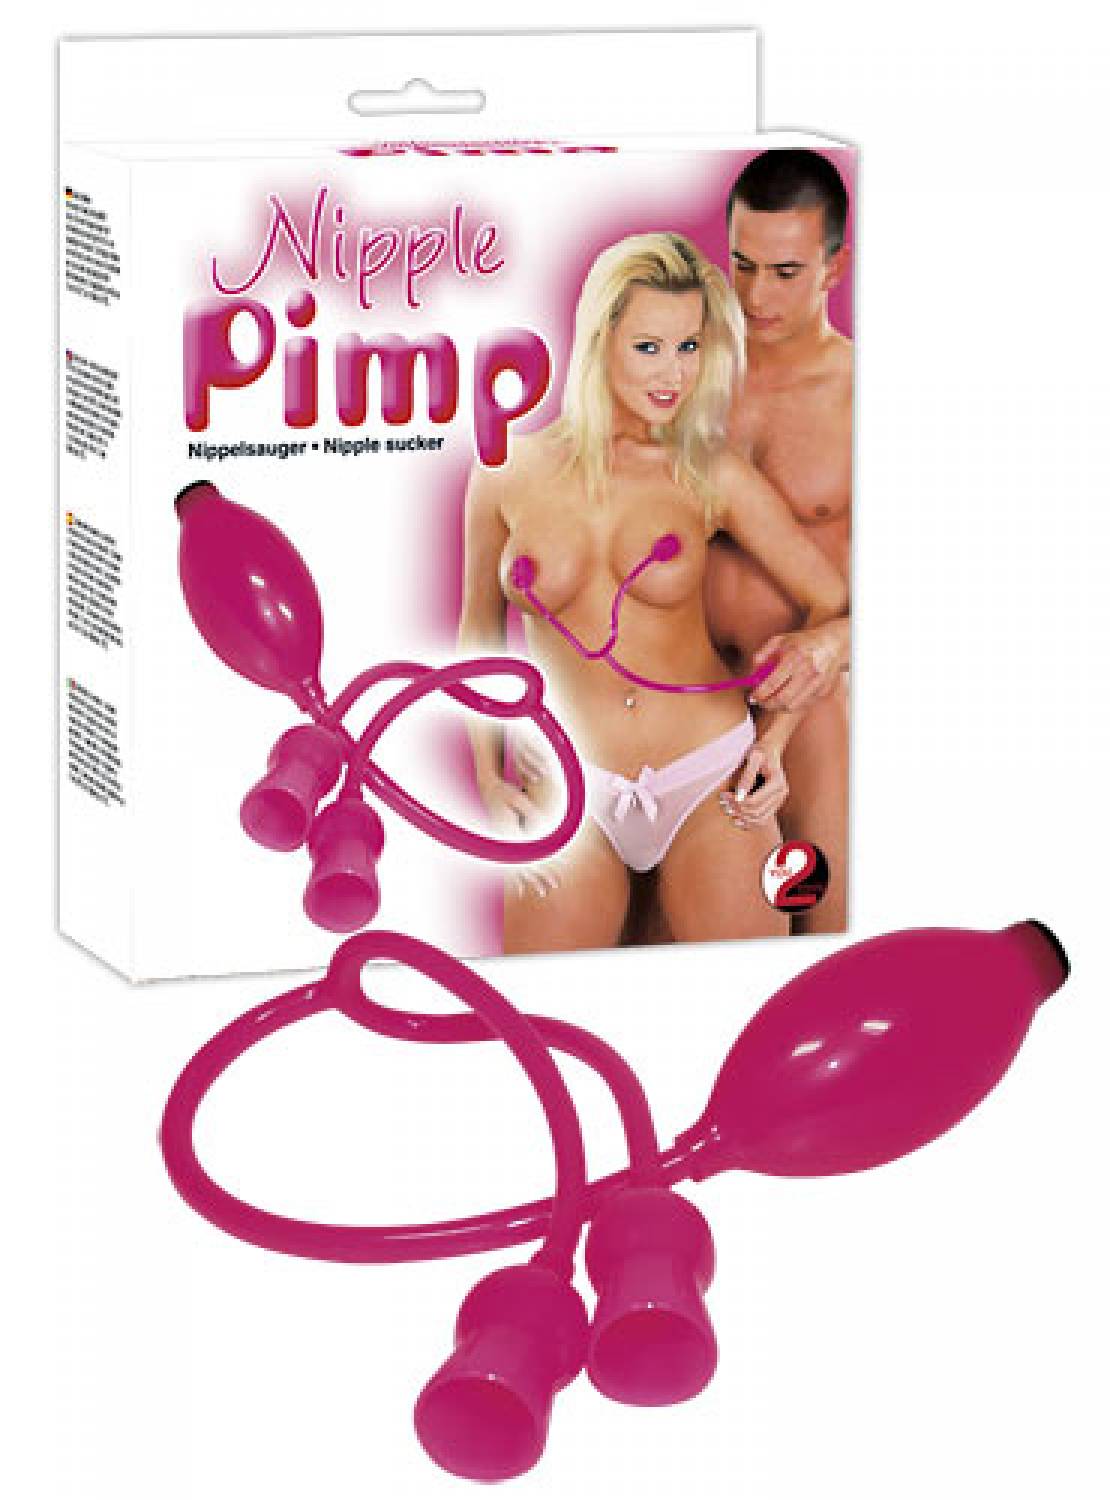 Nipple Pimp